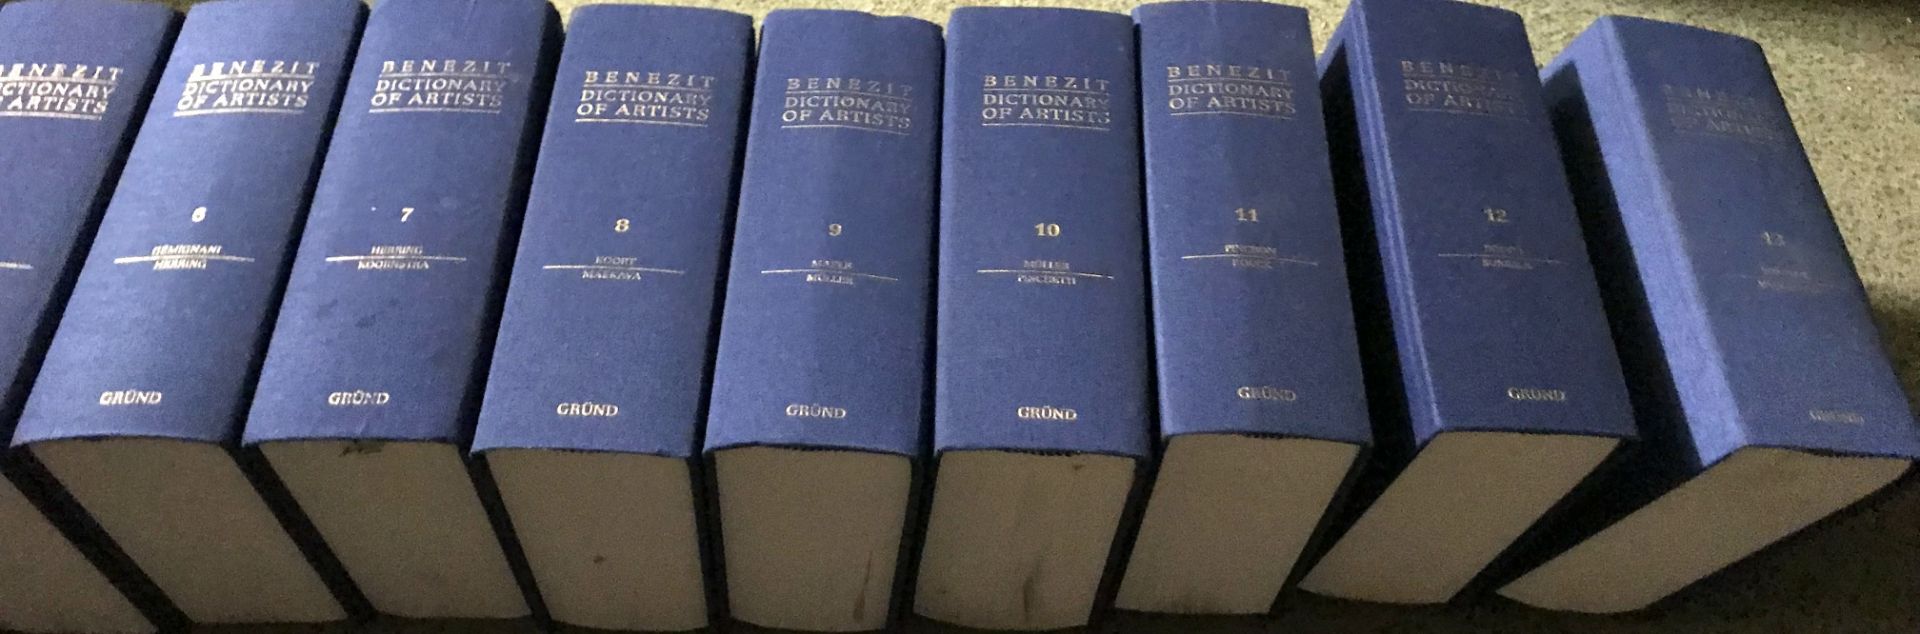 Editions Gründ, Paris: Benezit Dictionary of Artists,14 Bände - Image 4 of 4